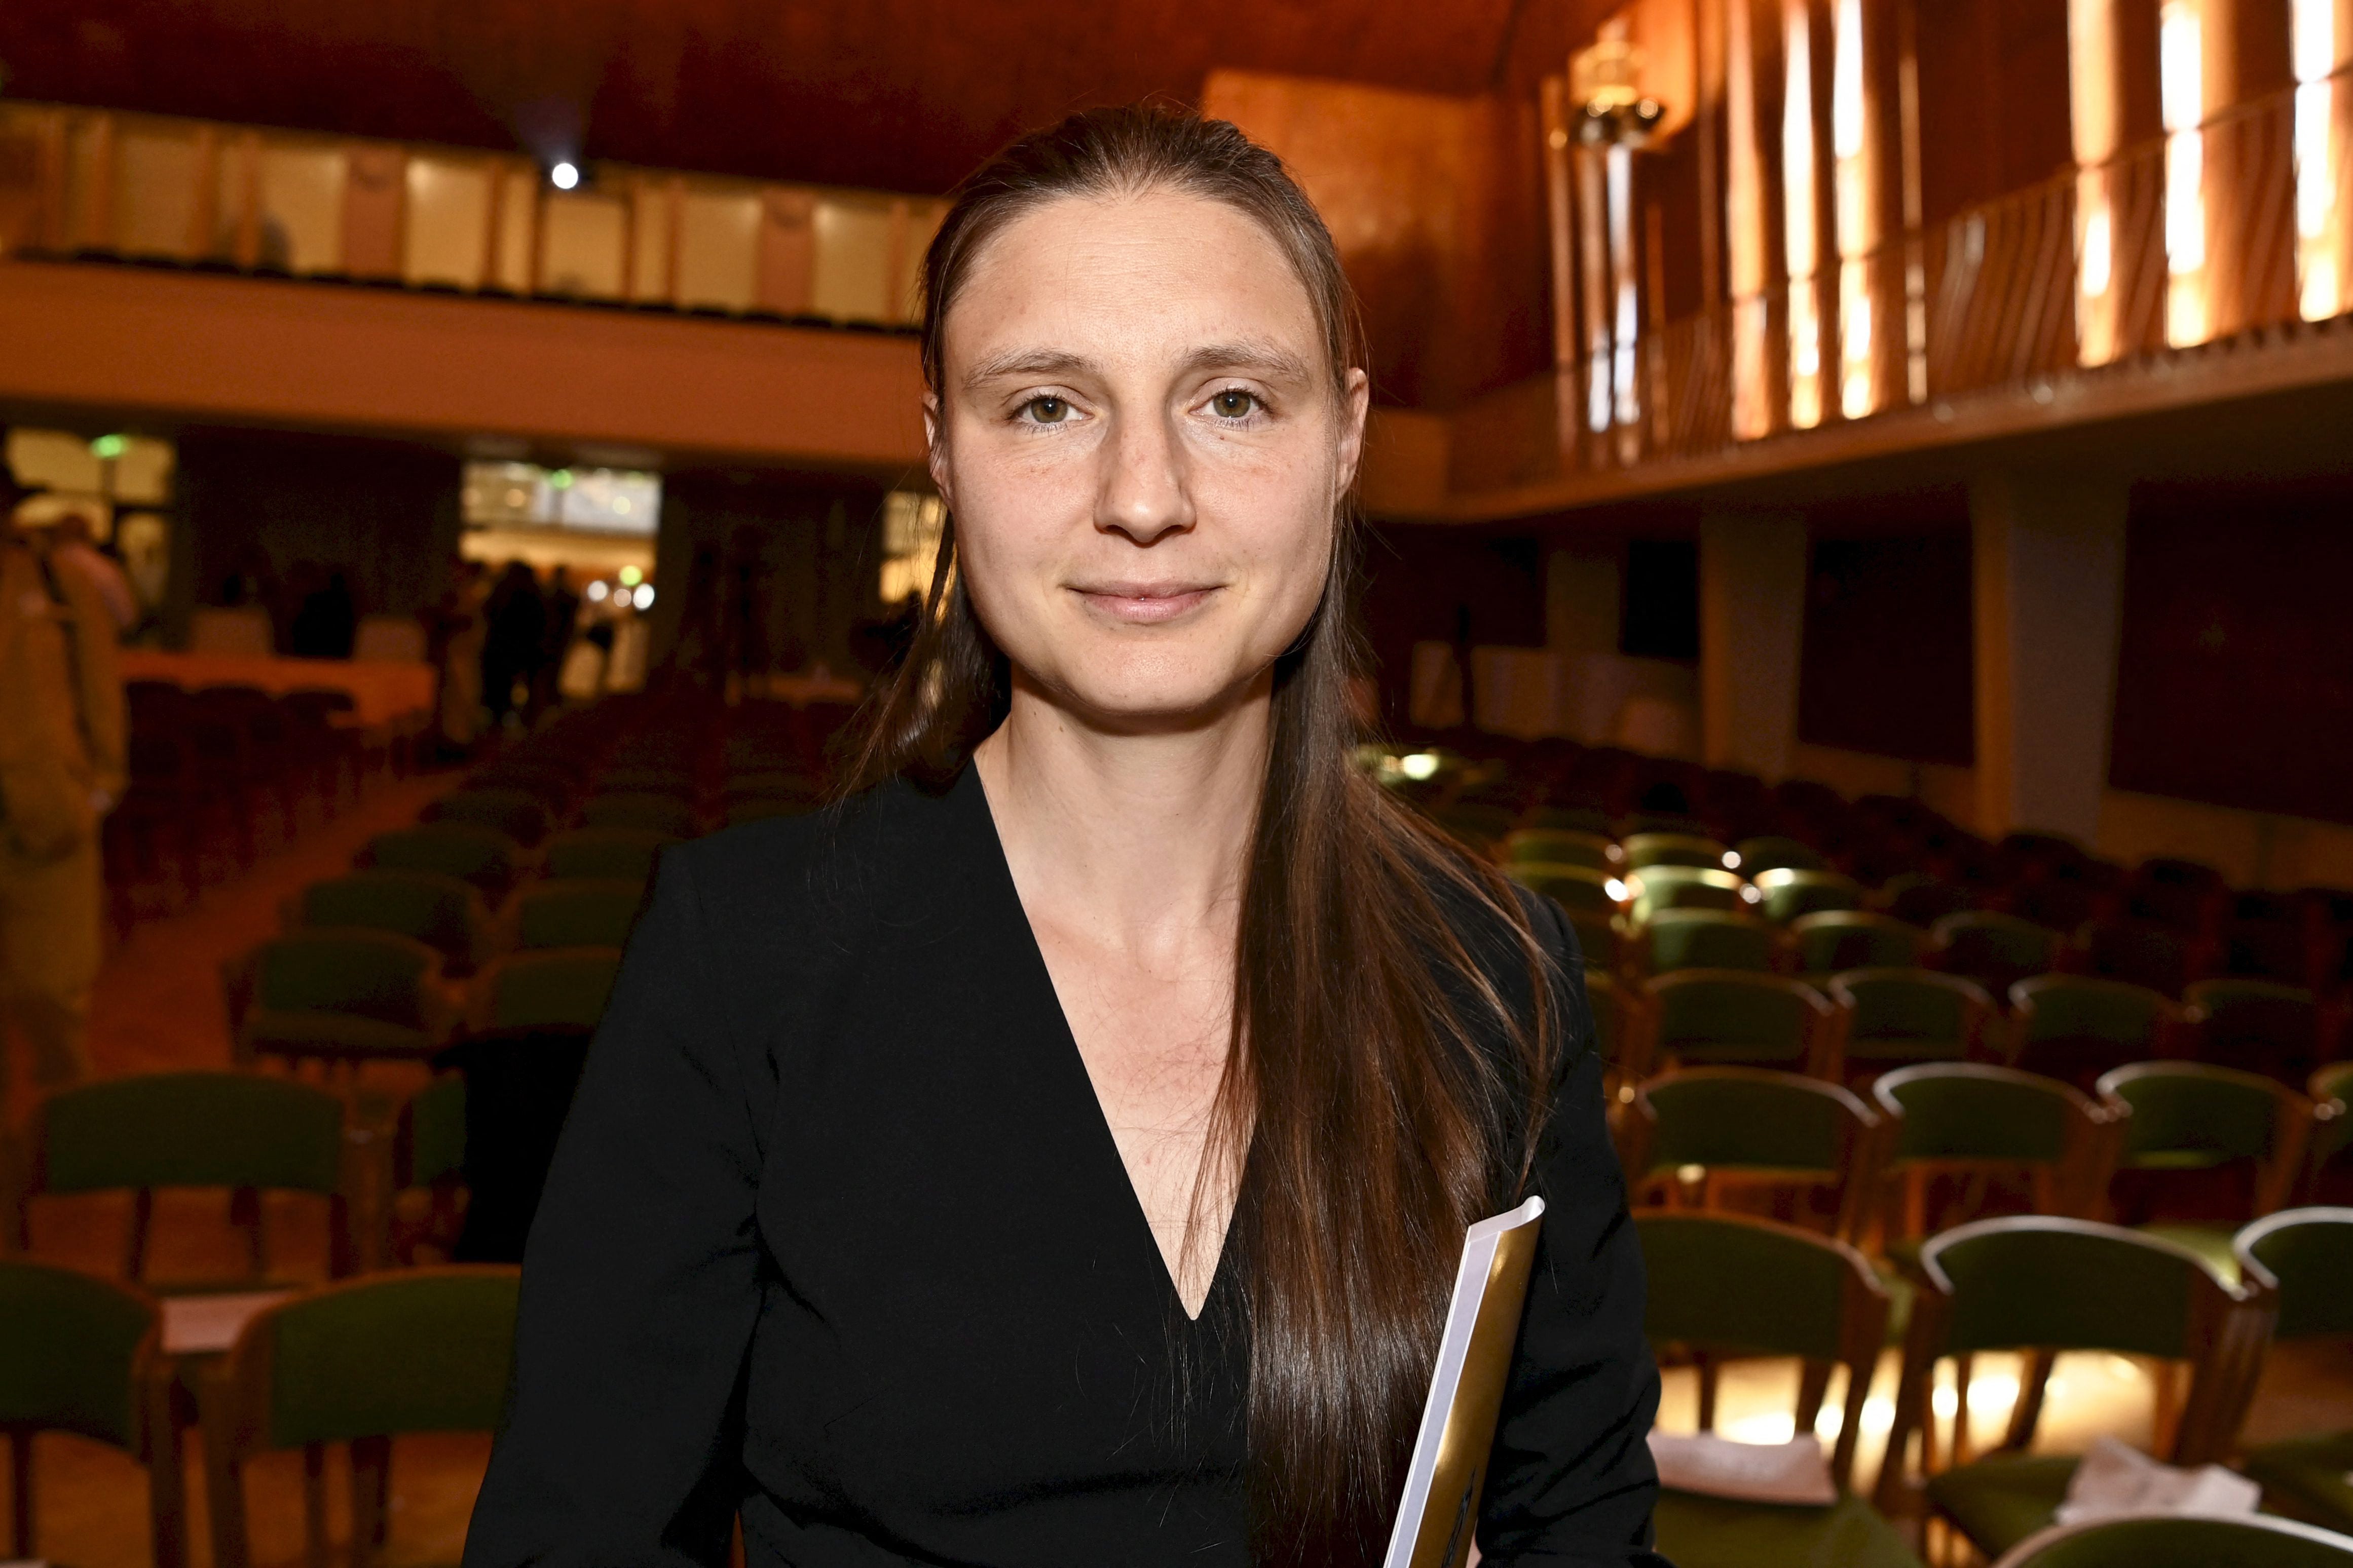 Ukrainian Mathematician Second Woman to Win Prestigious Fields